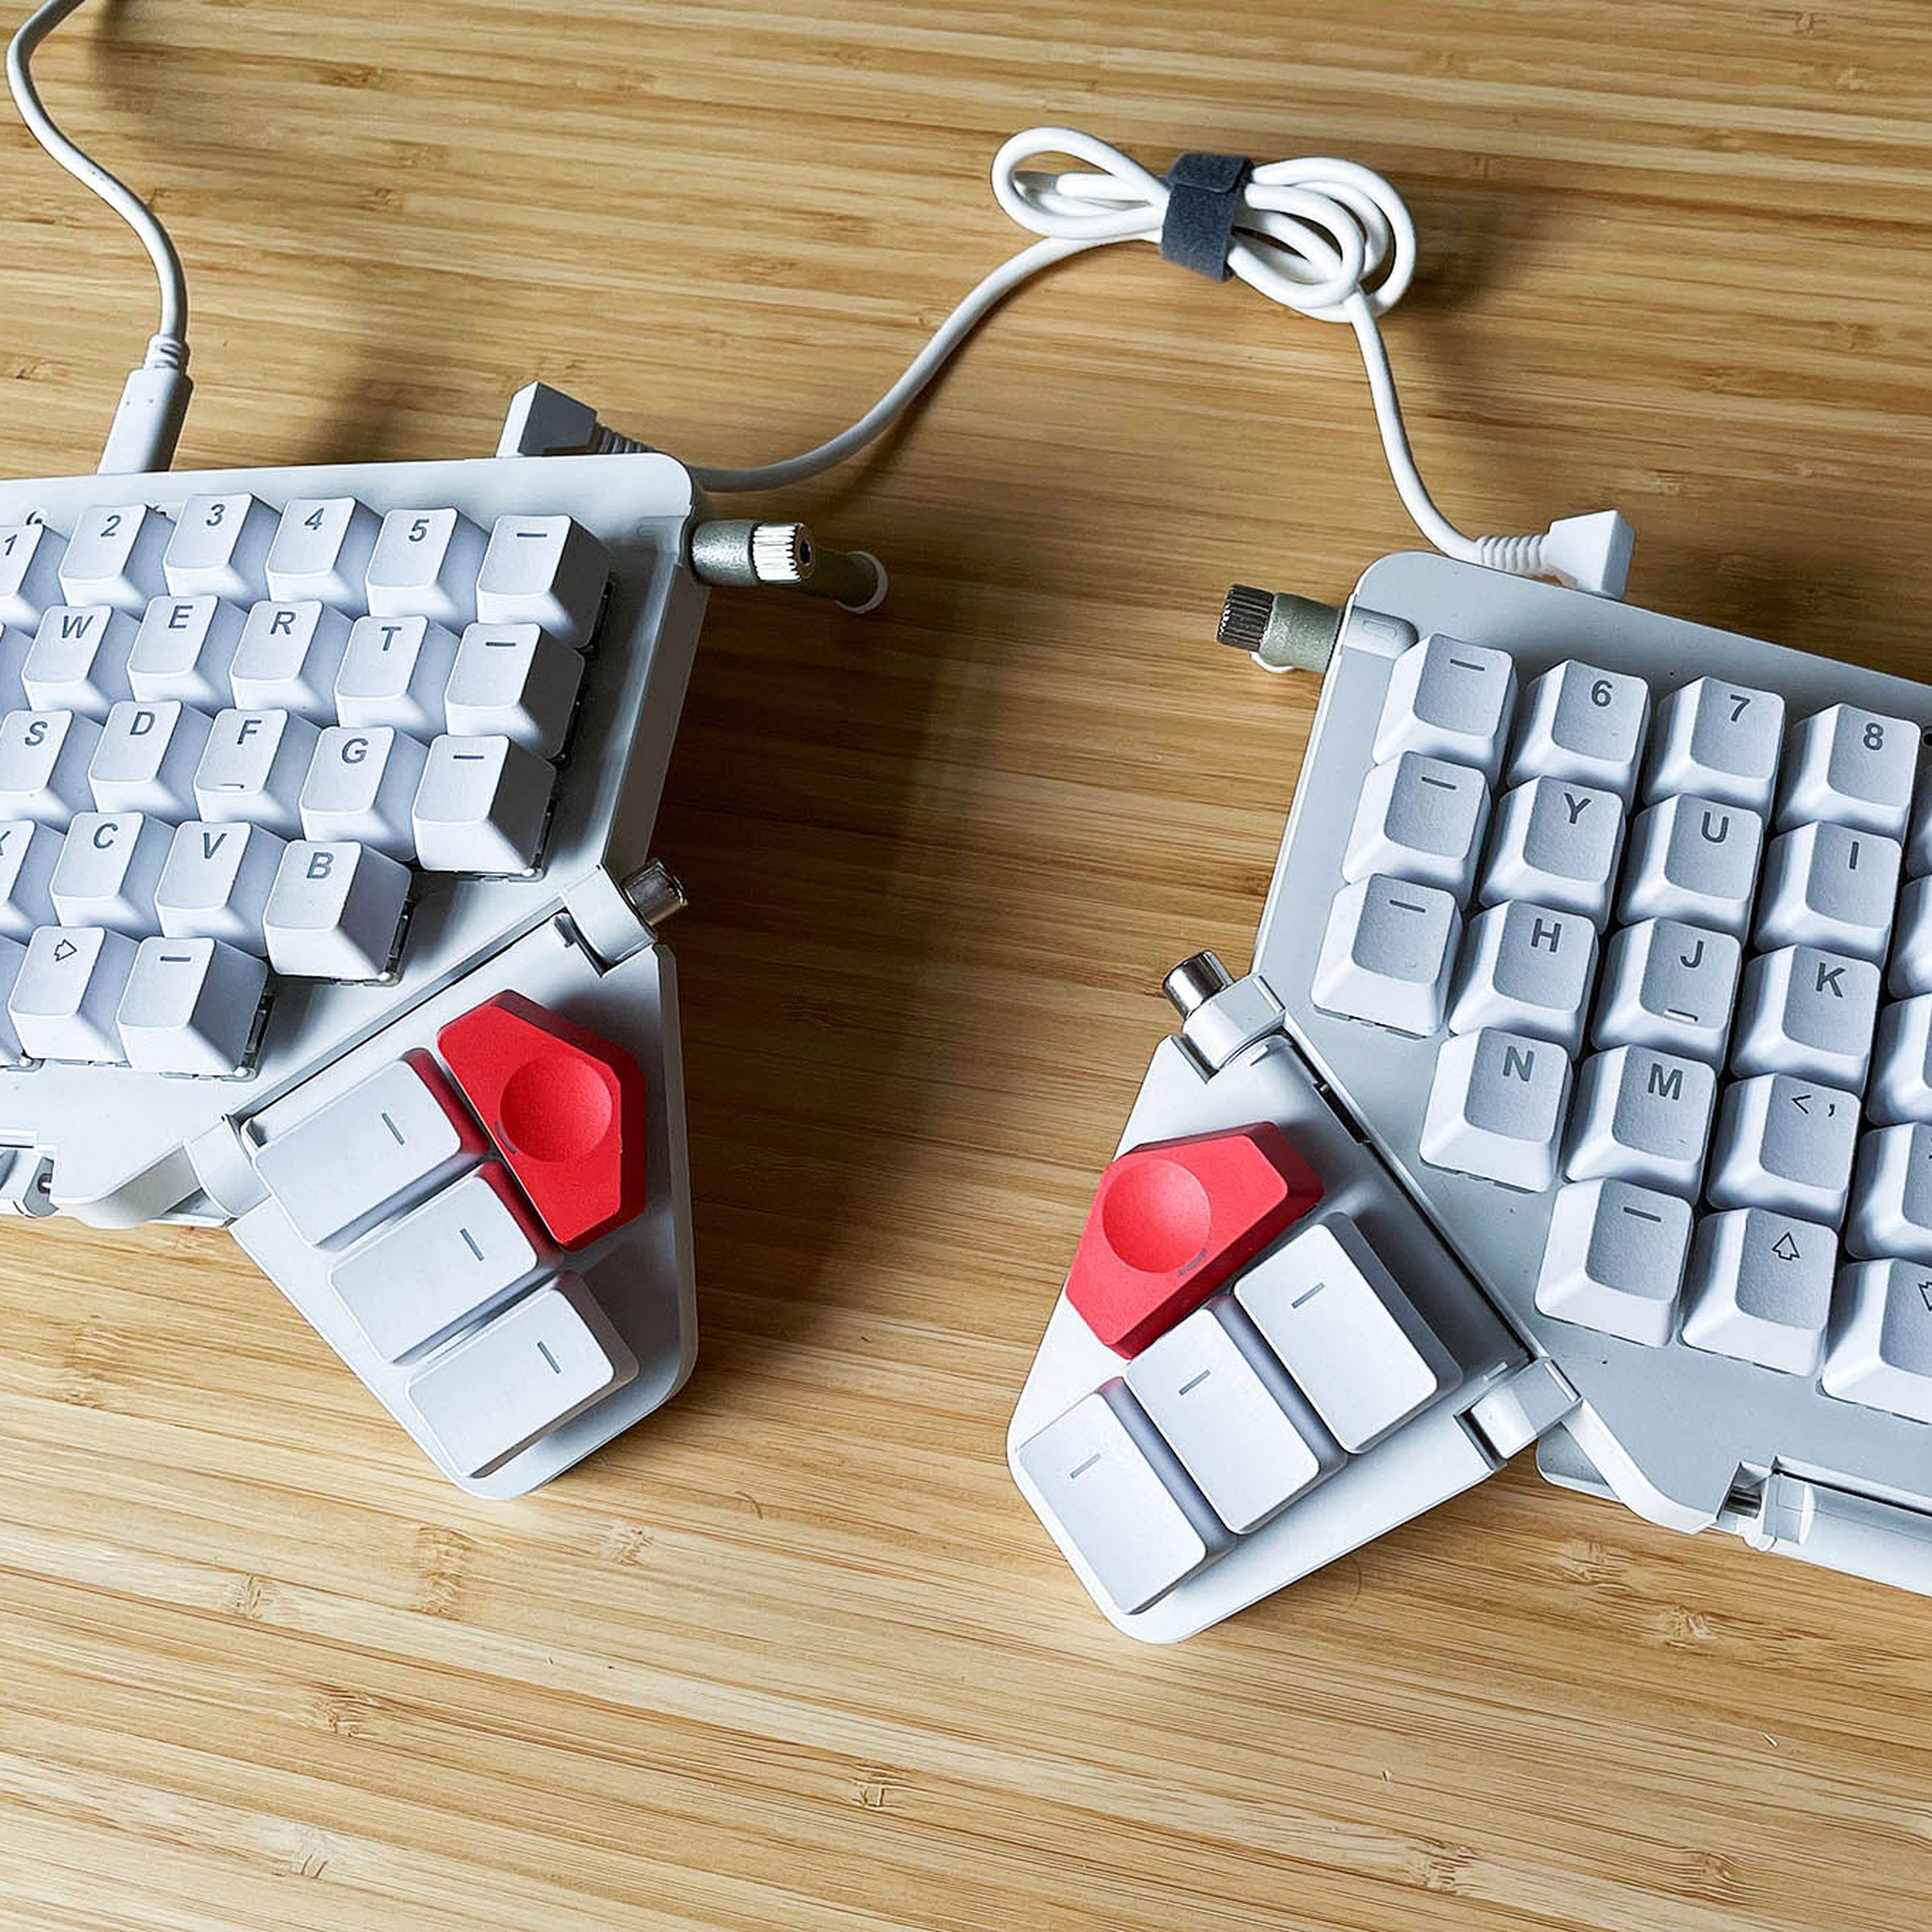 The ZSA Moonlander Mark 1 ergonomic customizable keyboard.